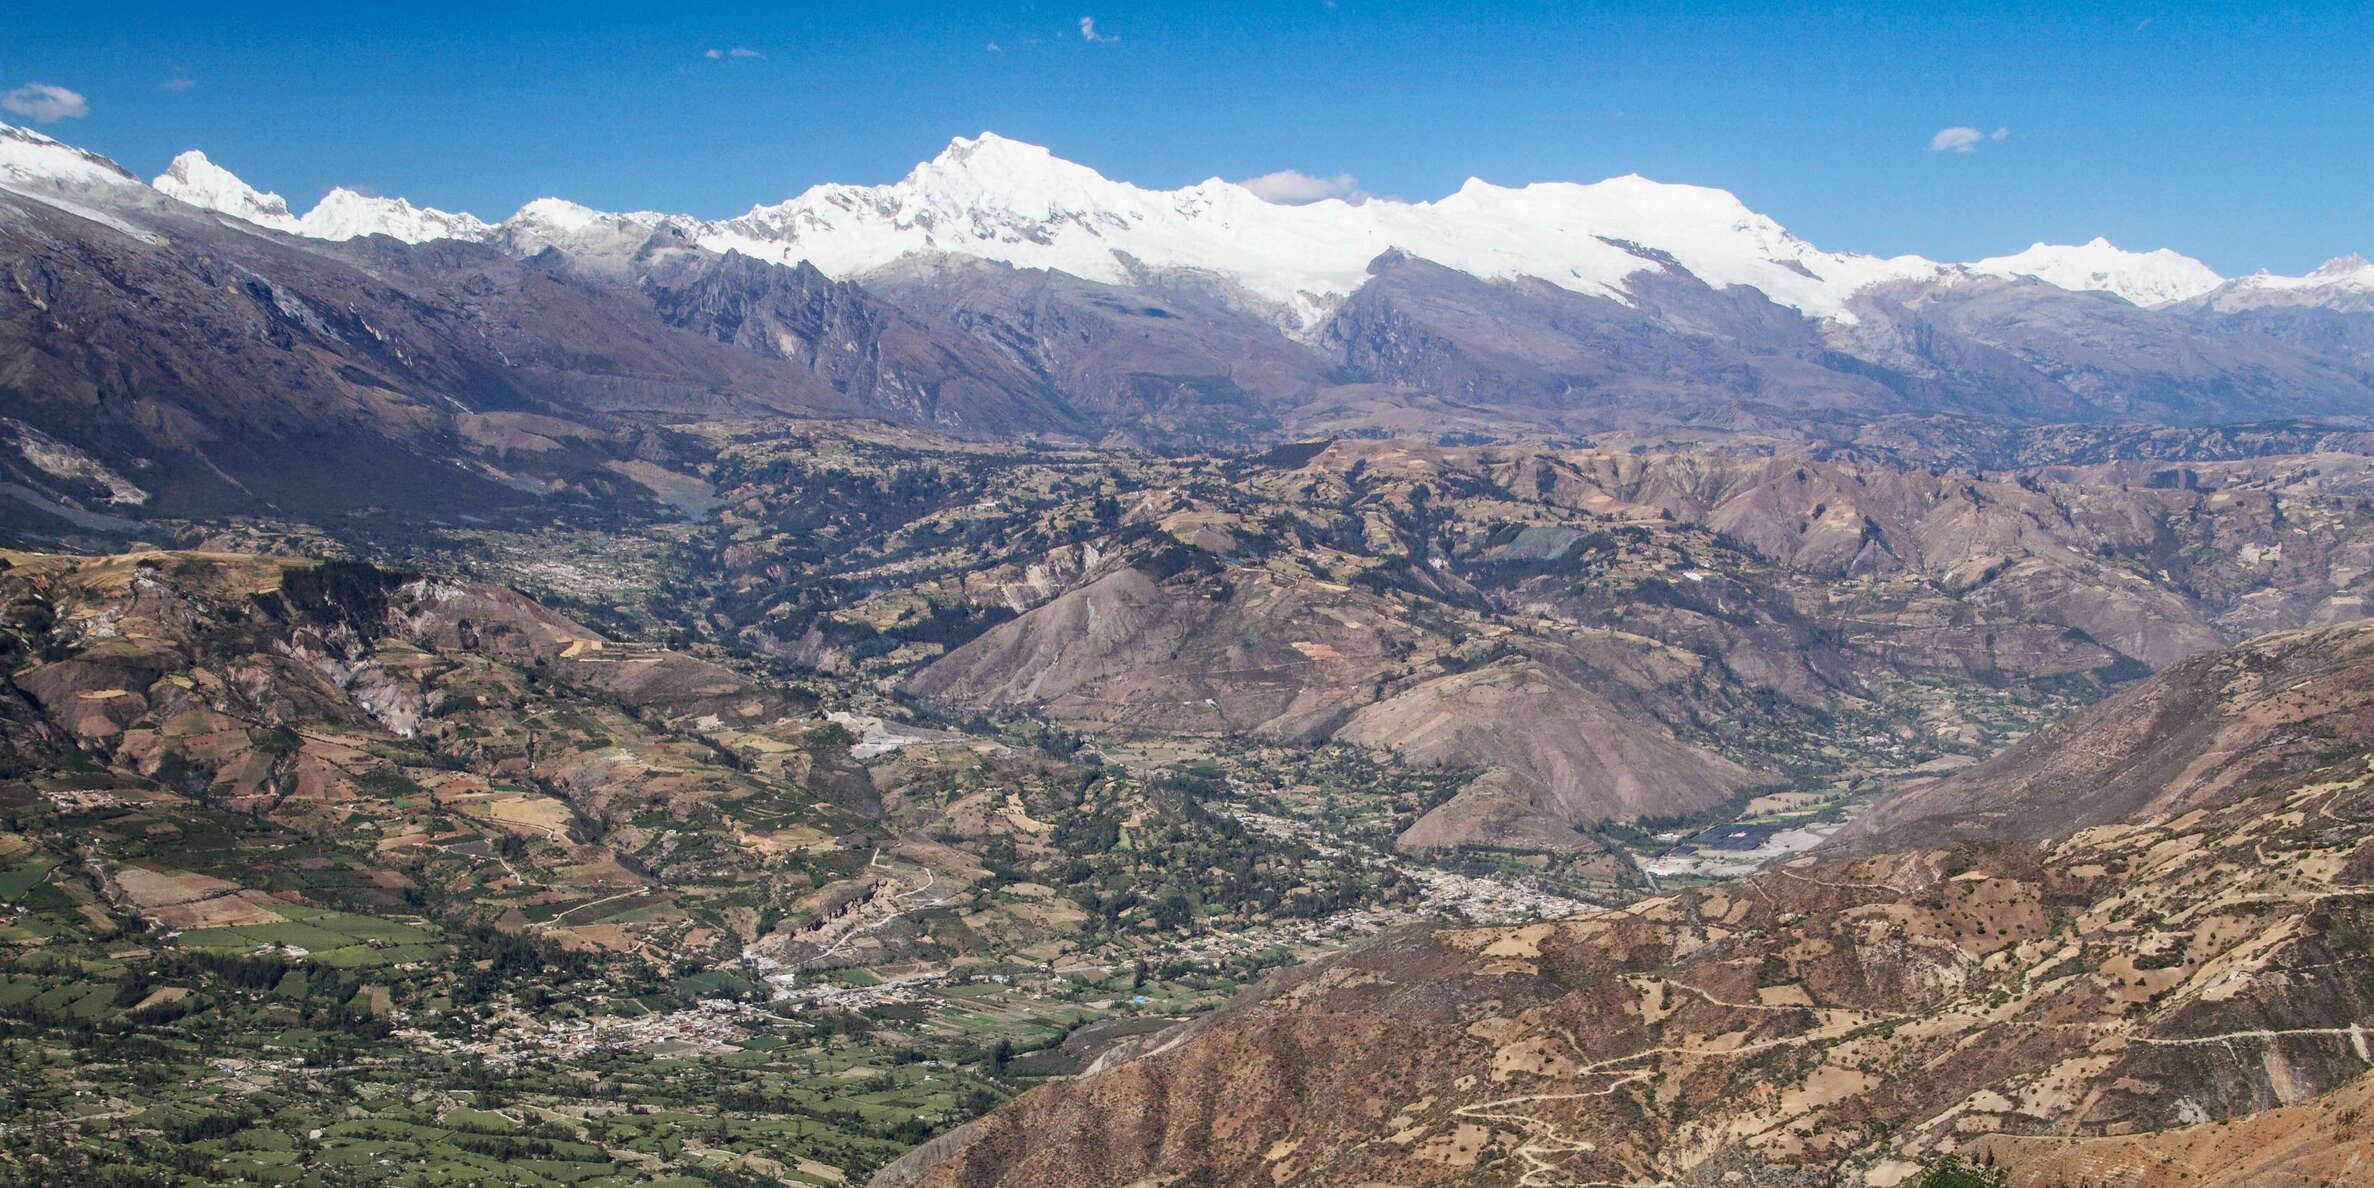 Callejón de Huaylas and Cordillera Blanca